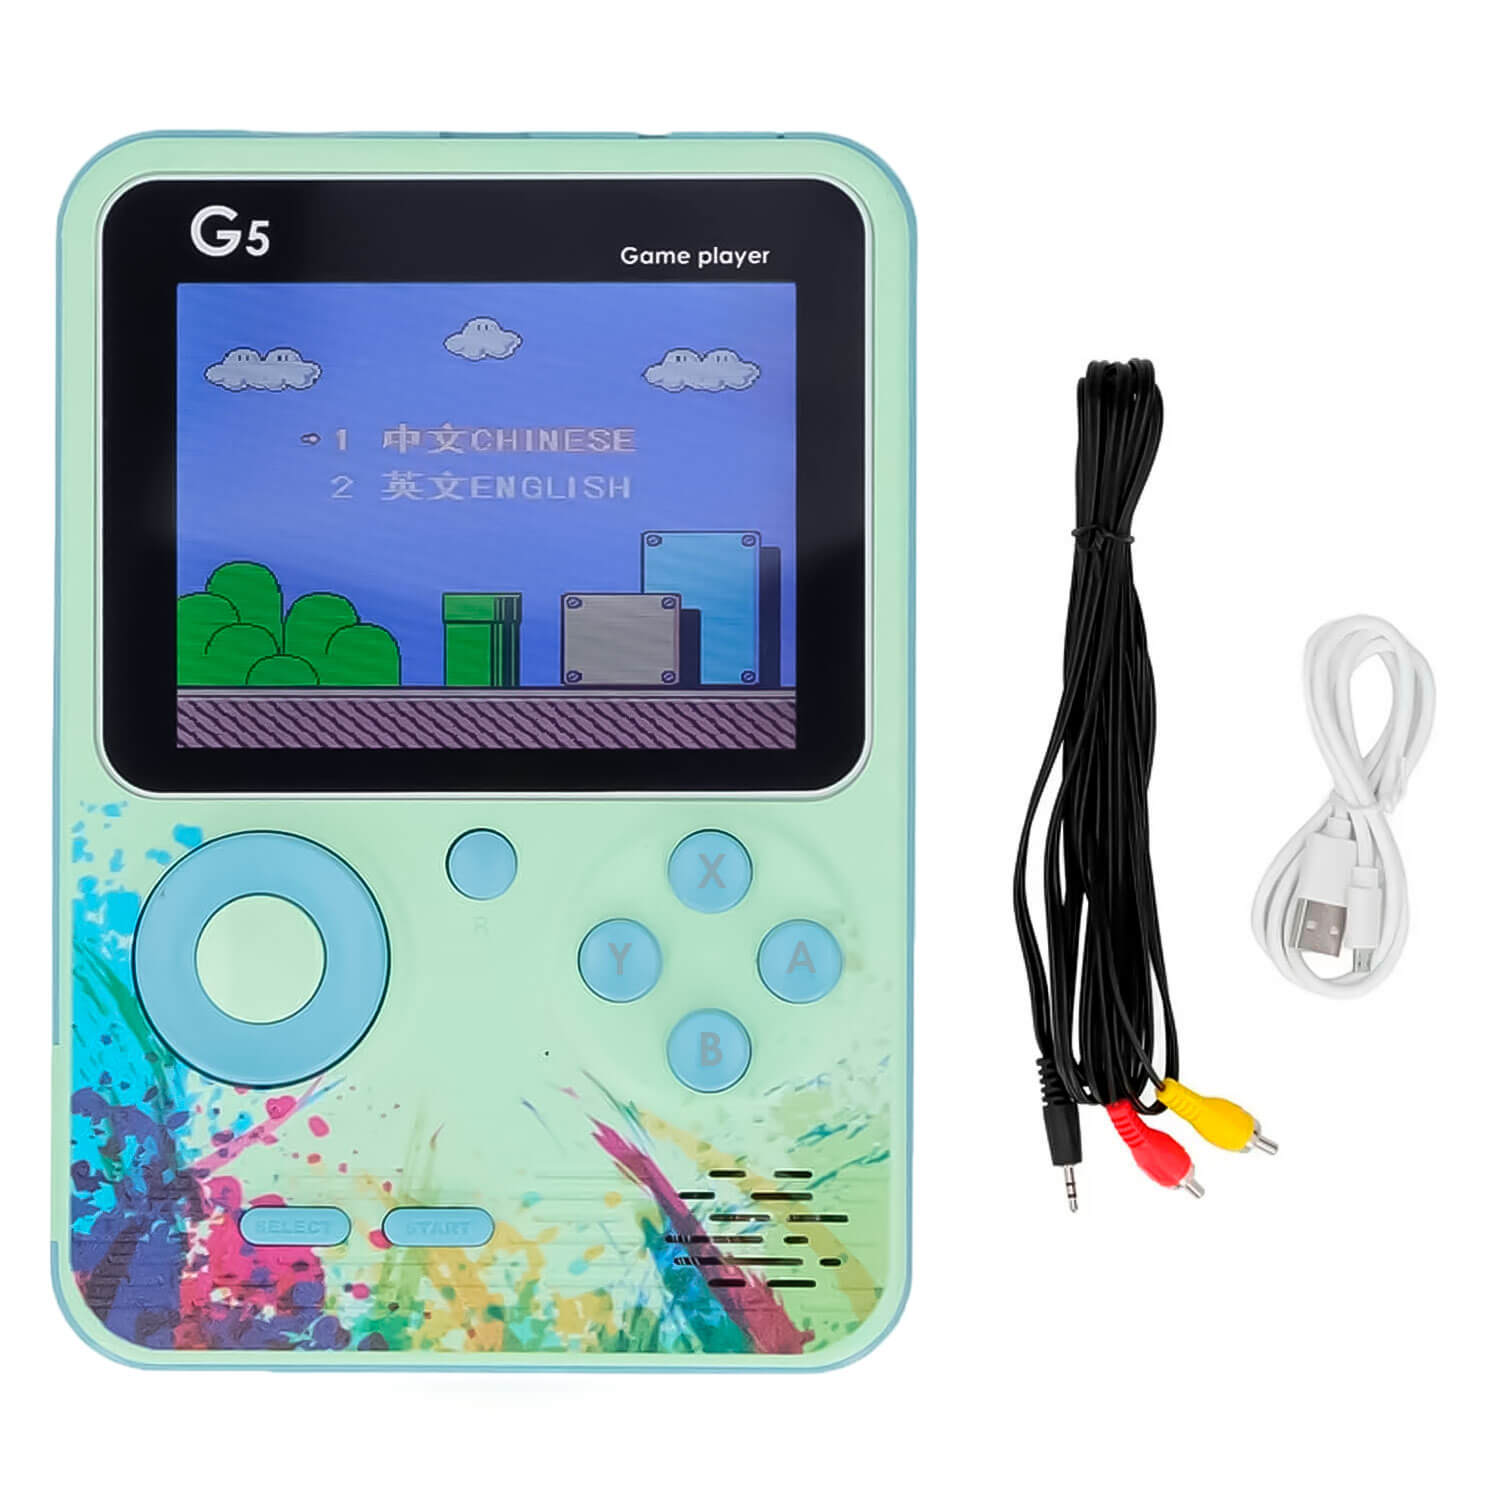 Console Portátil Game Boy Game Box G5 500 Jogos - Verde